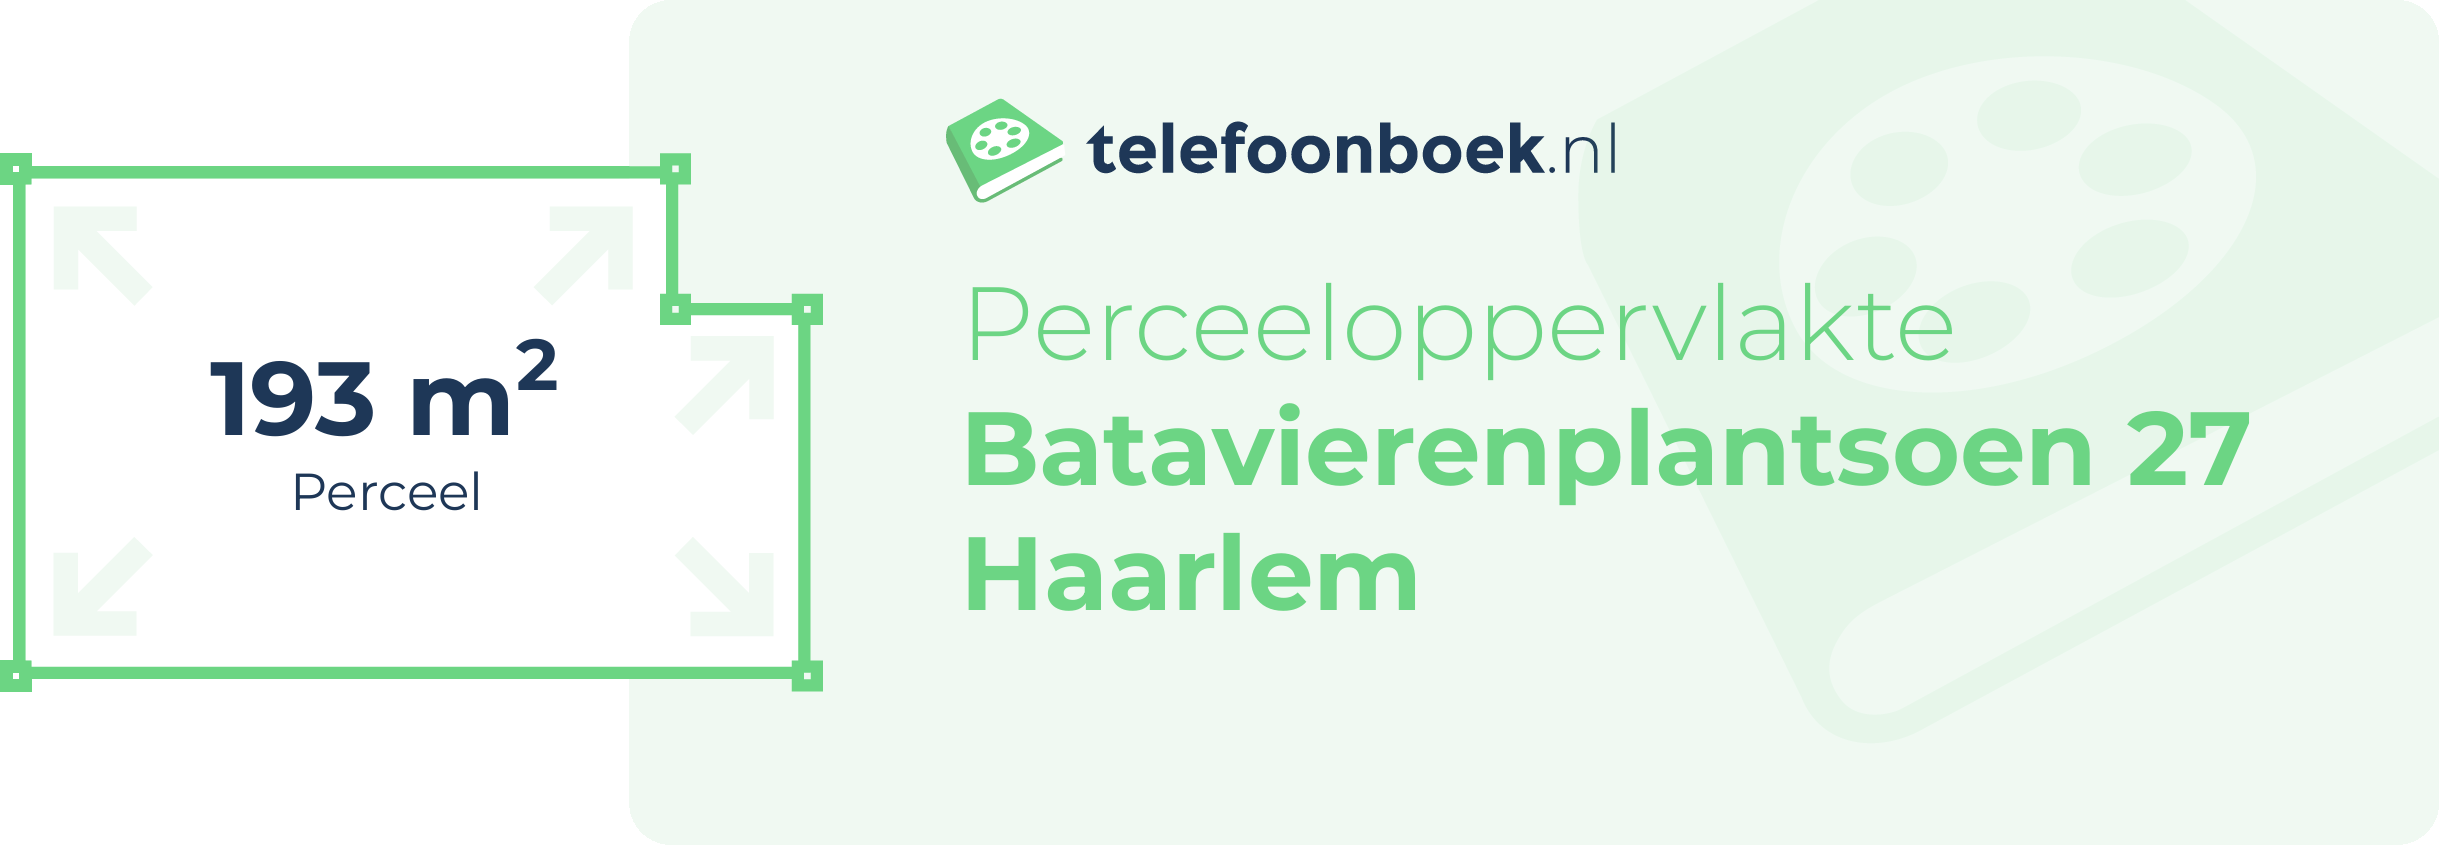 Perceeloppervlakte Batavierenplantsoen 27 Haarlem